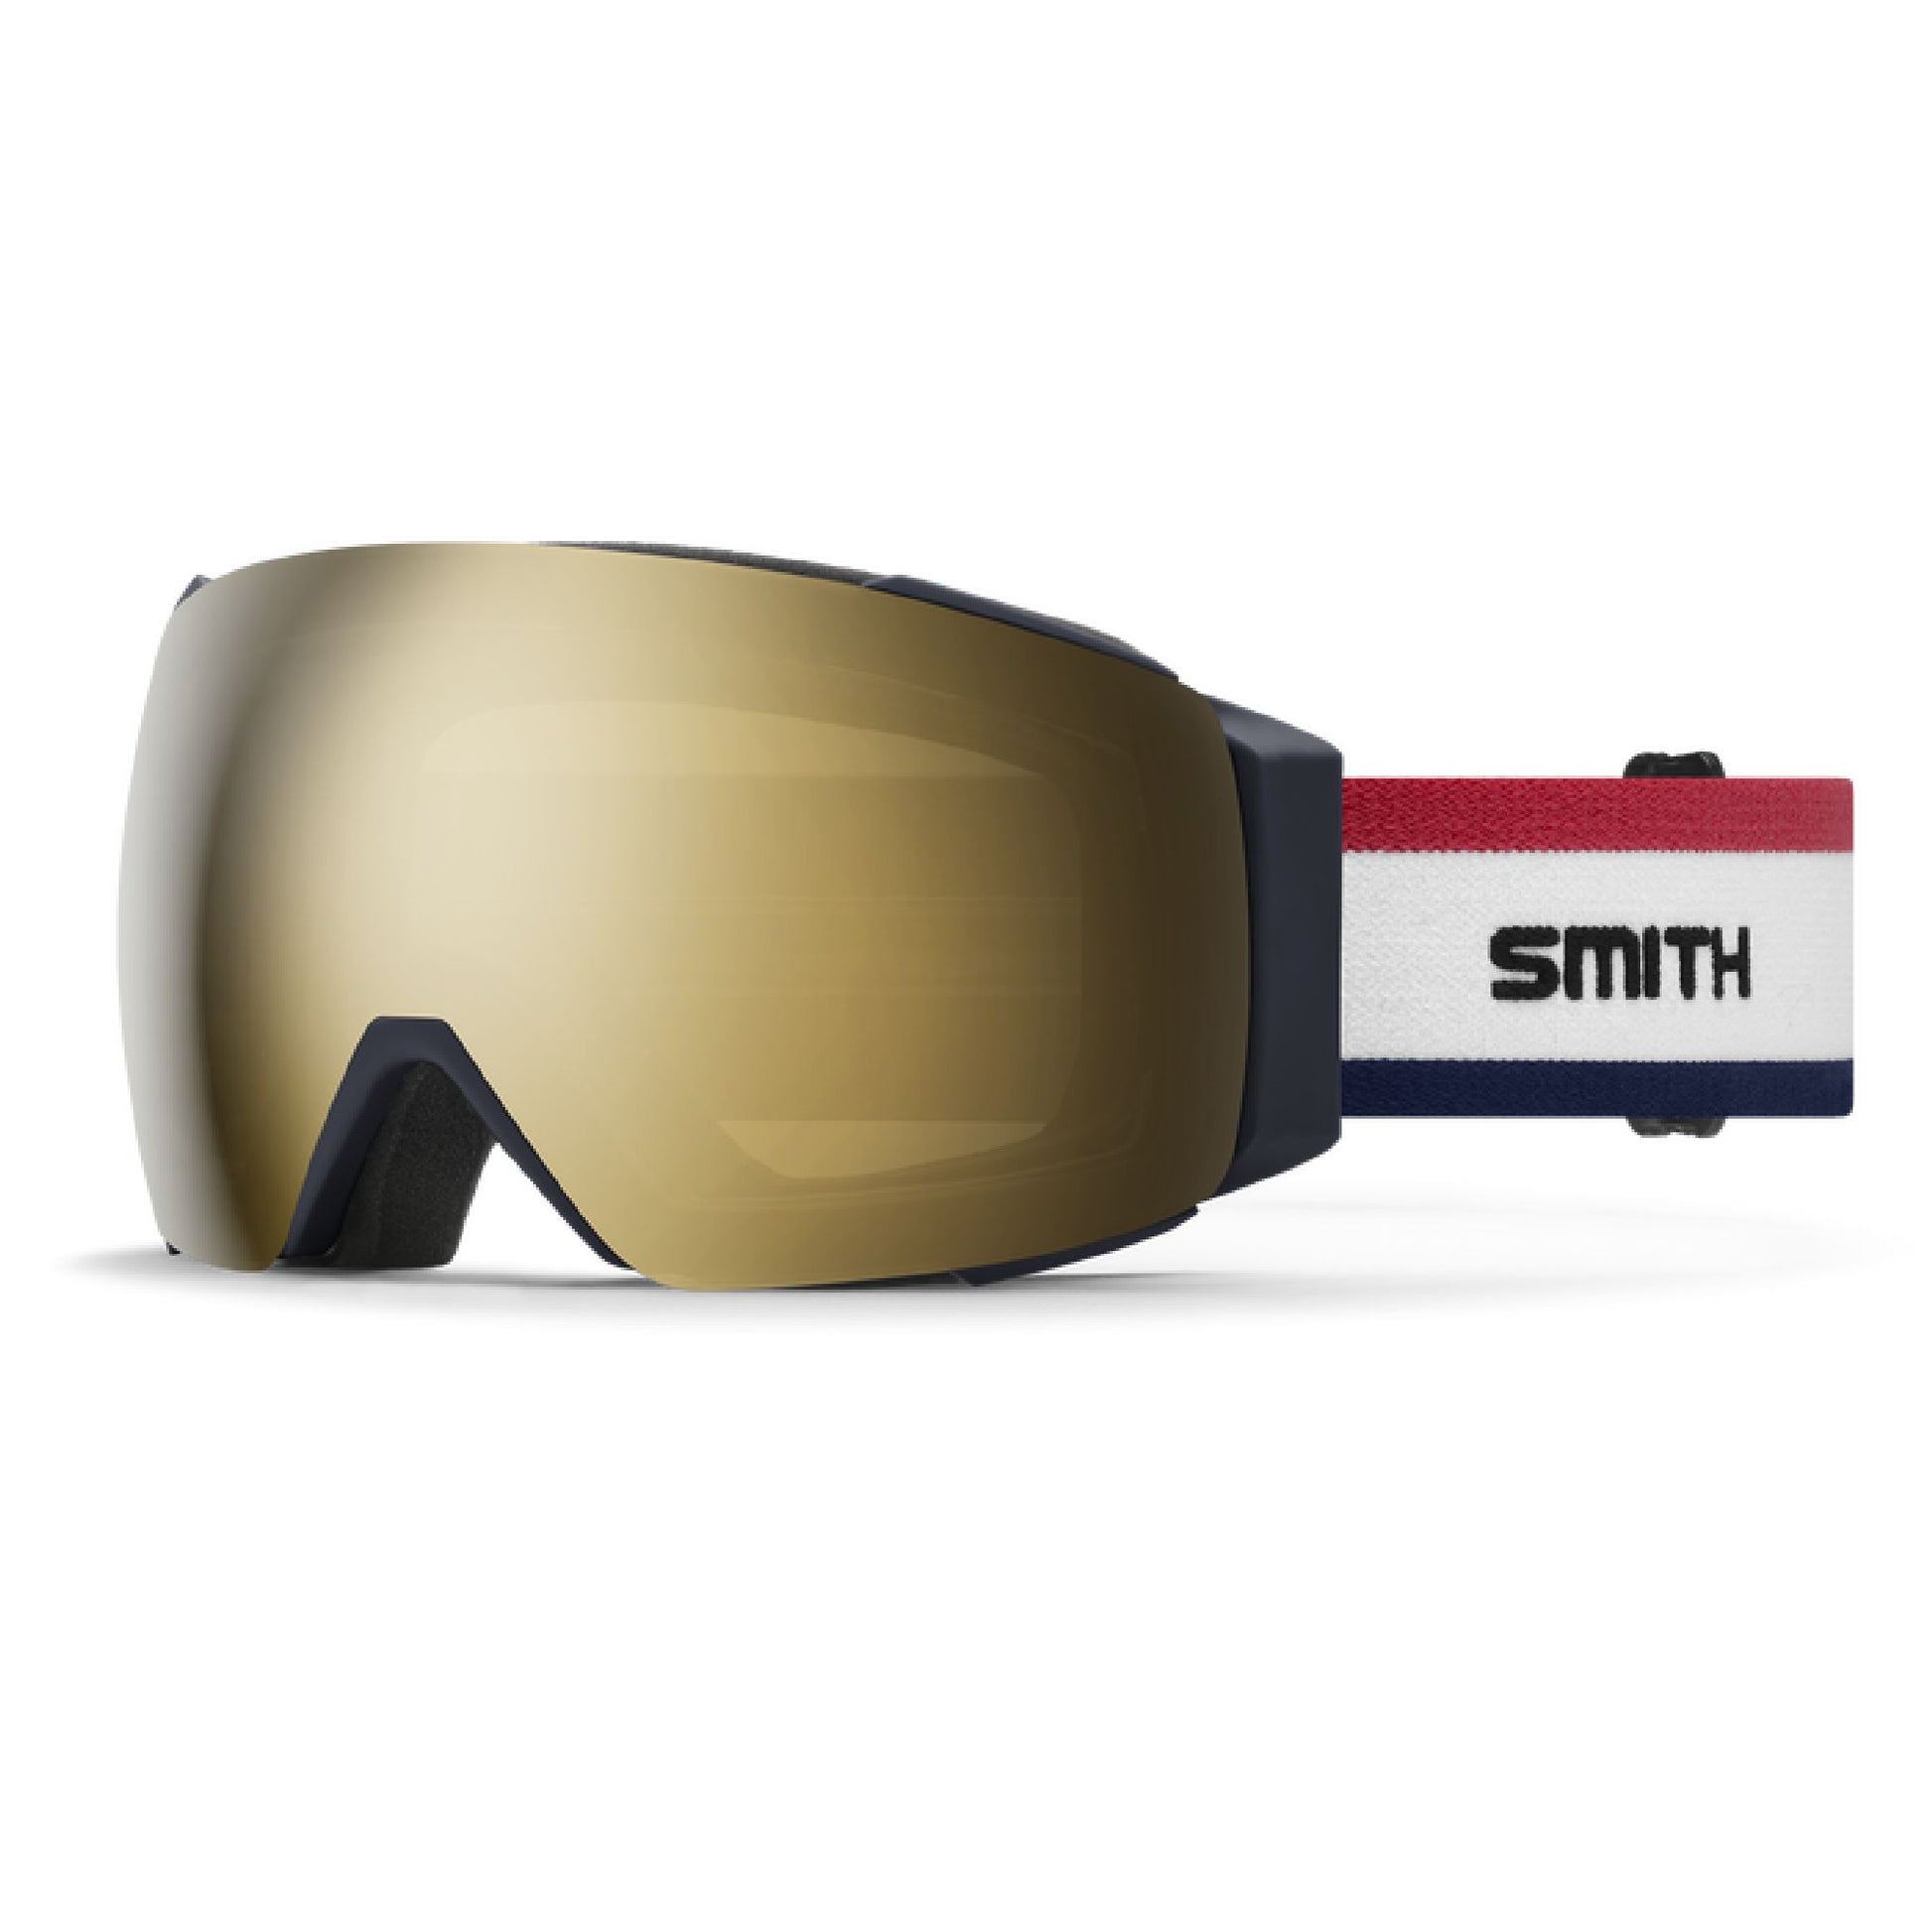 Smith I/O MAG Low Bridge Fit Snow Goggle Sun Valley Archive ChromaPop Sun Black Gold Mirror - Smith Snow Goggles